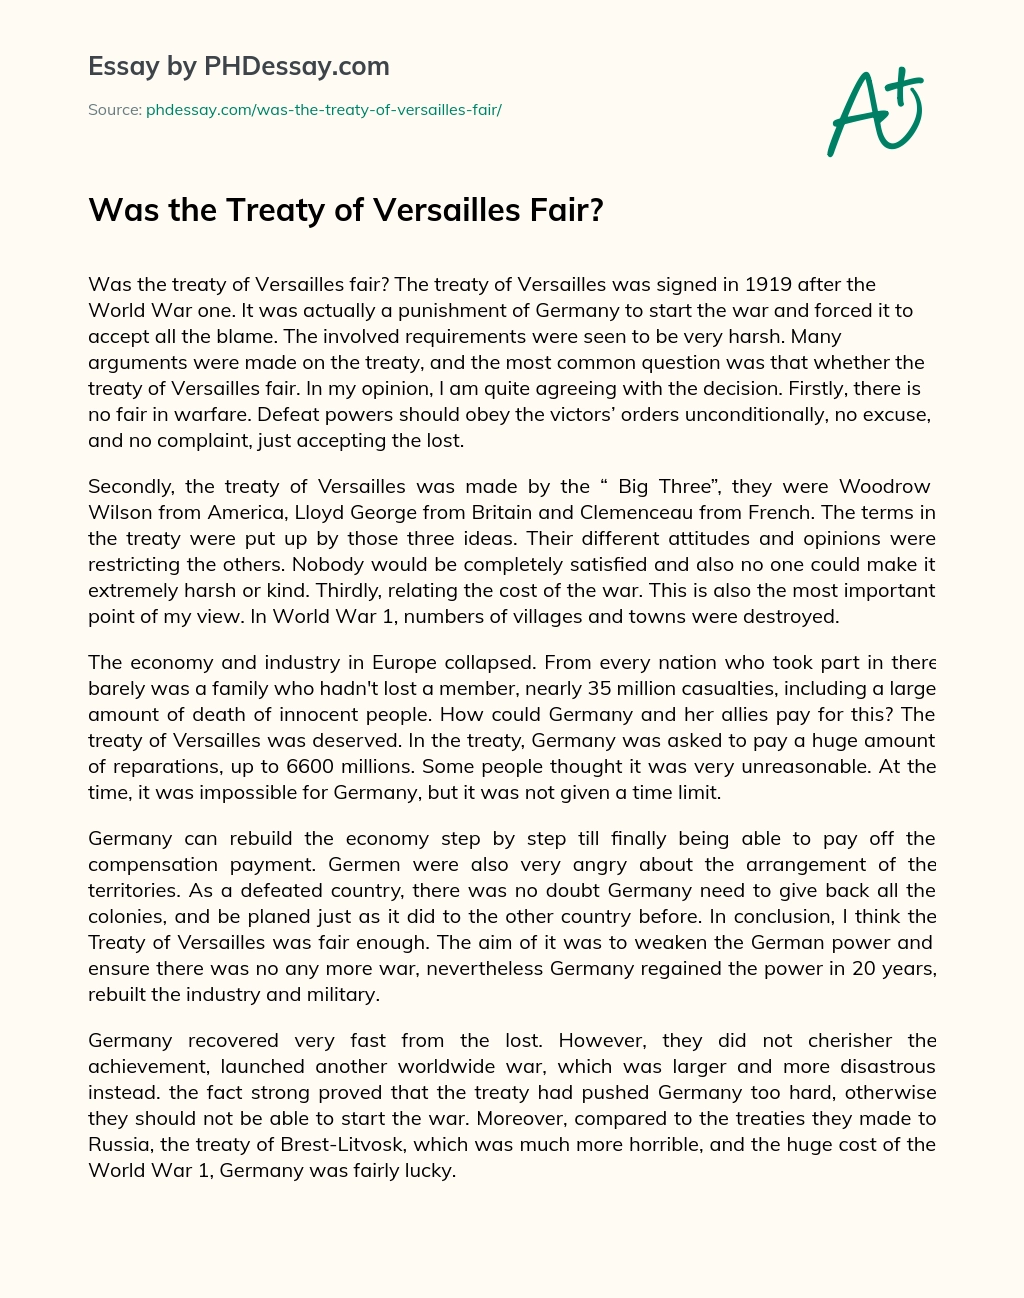 Was the Treaty of Versailles Fair? essay